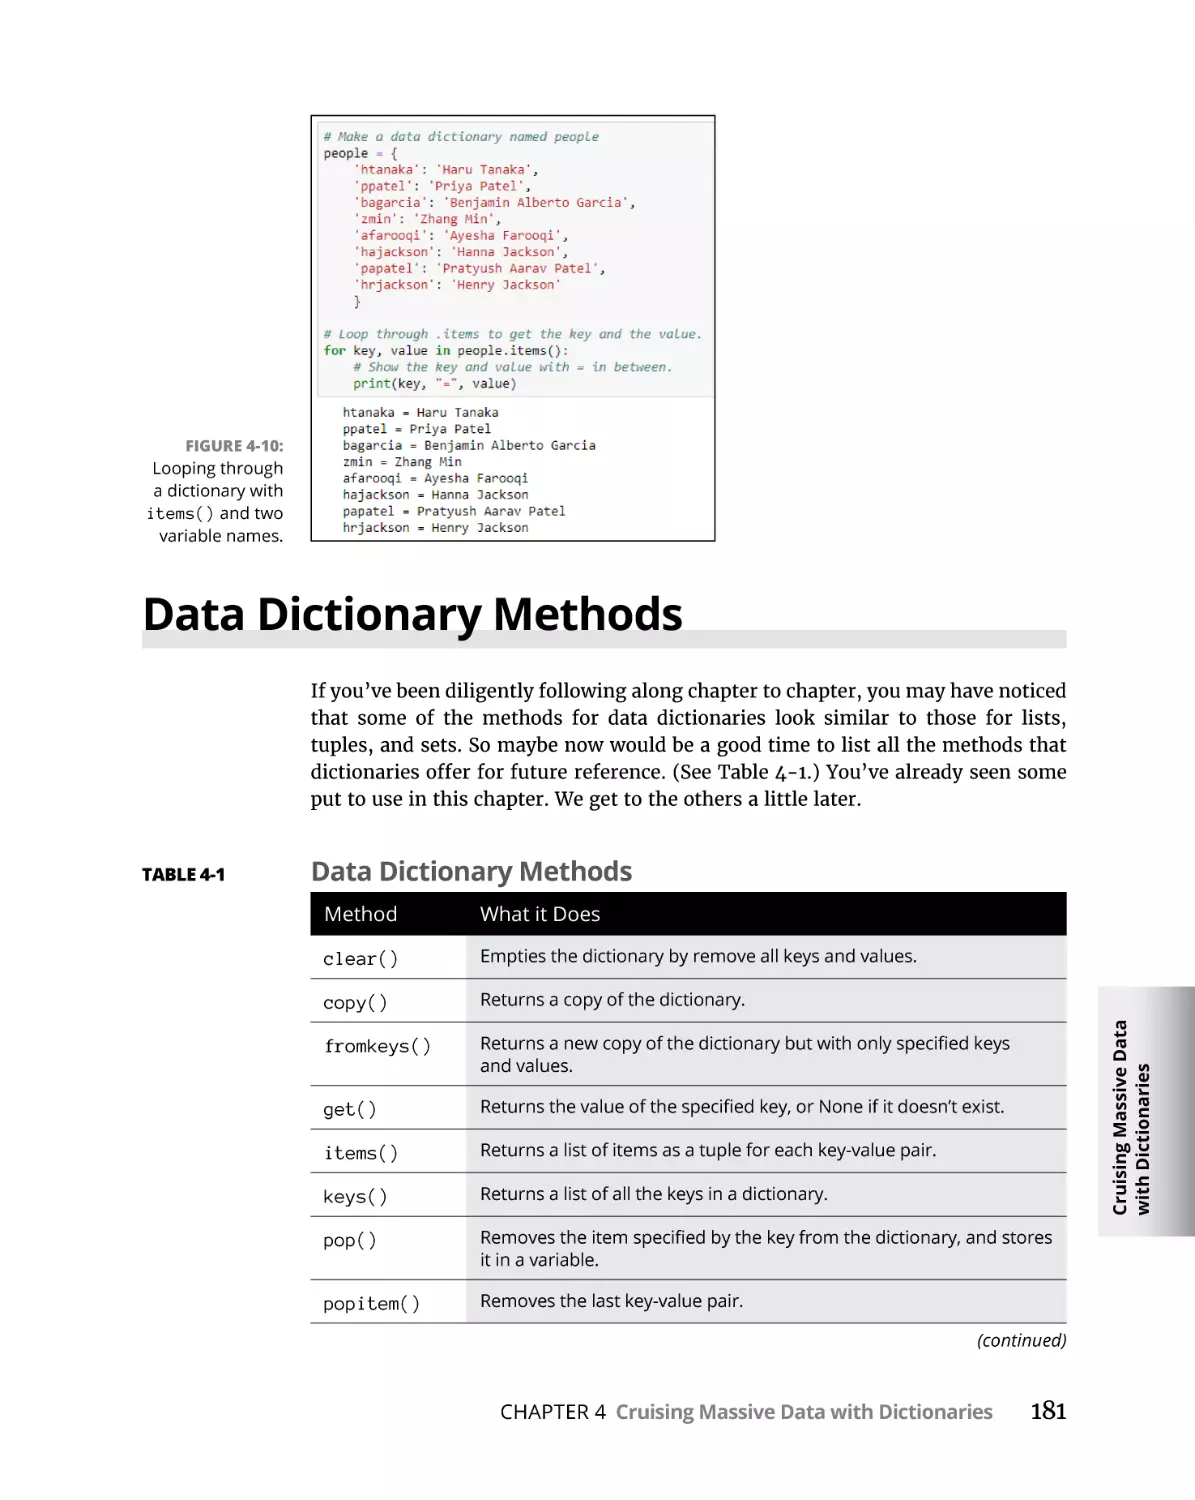 Data Dictionary Methods